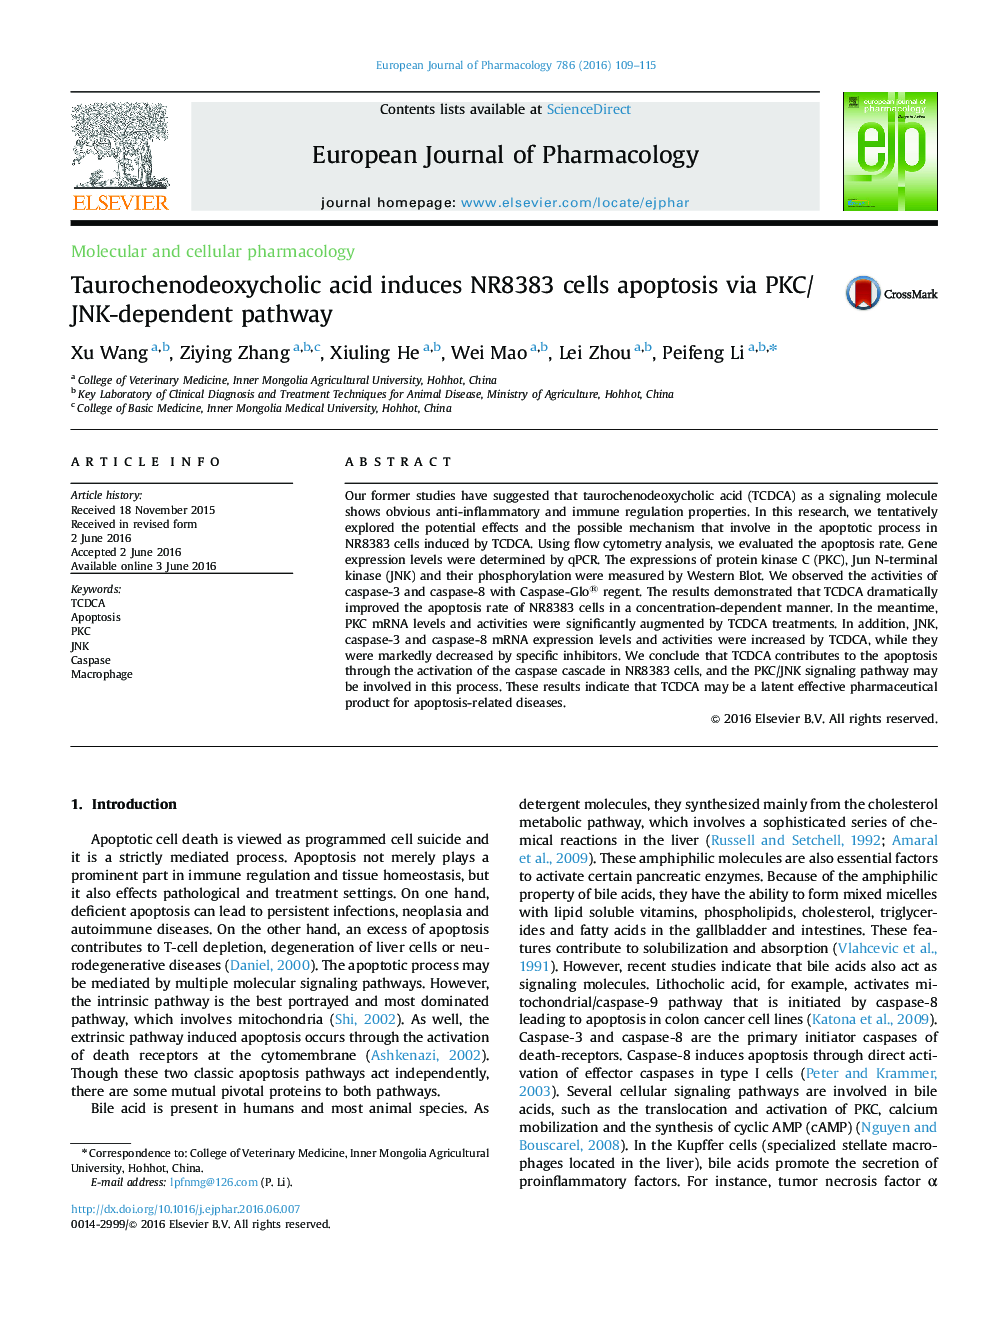 Taurochenodeoxycholic acid induces NR8383 cells apoptosis via PKC/JNK-dependent pathway